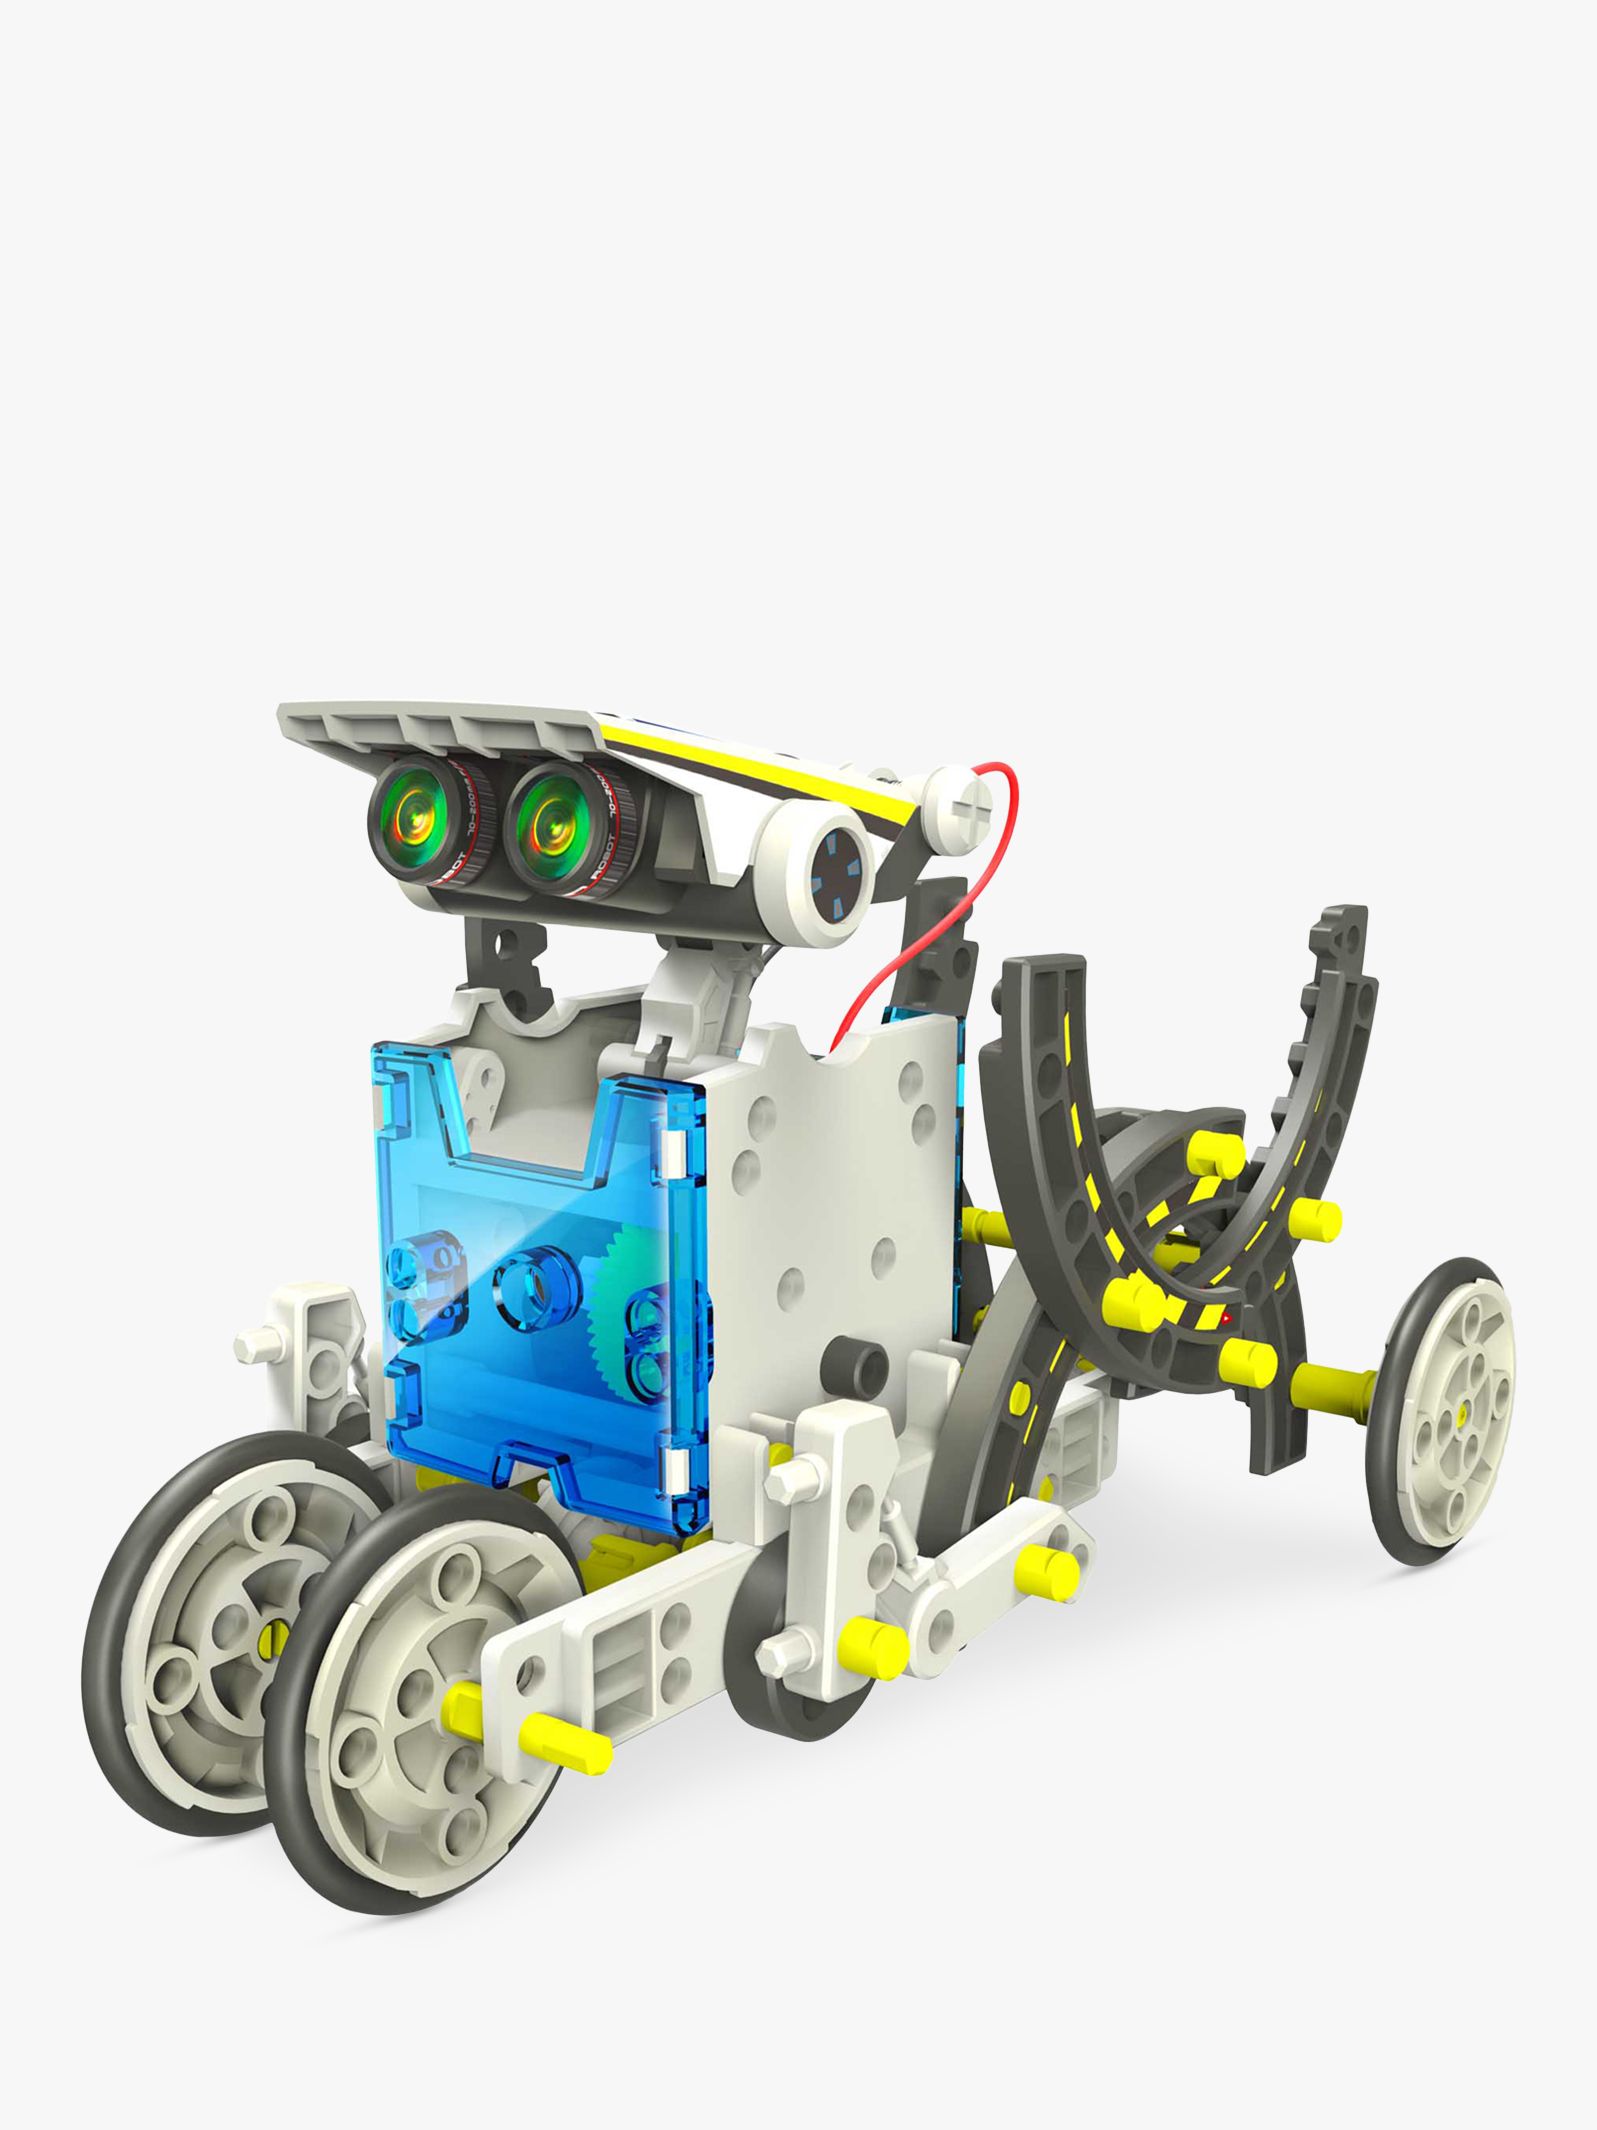 advanced 14 in 1 diy solar robot kit